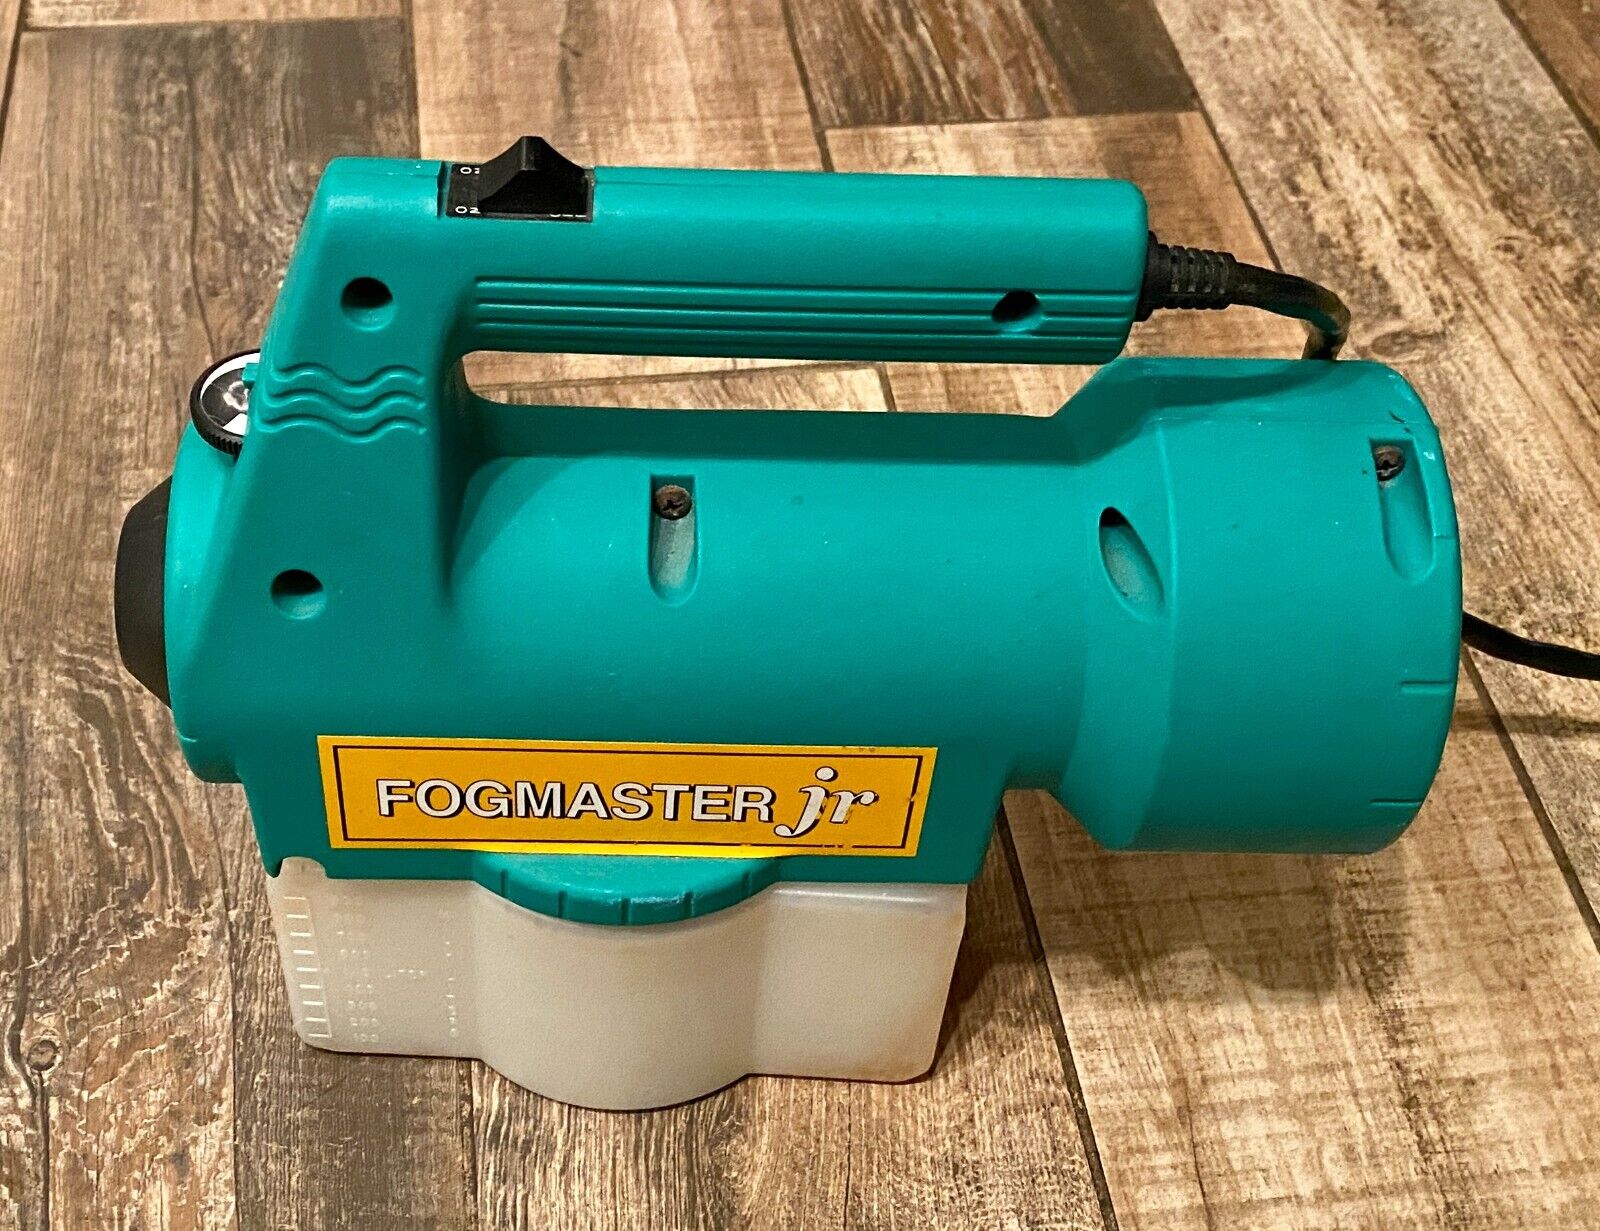 Fogmaster Jr. Electric Handheld Disinfecting Fogger Mister Model 533010ca